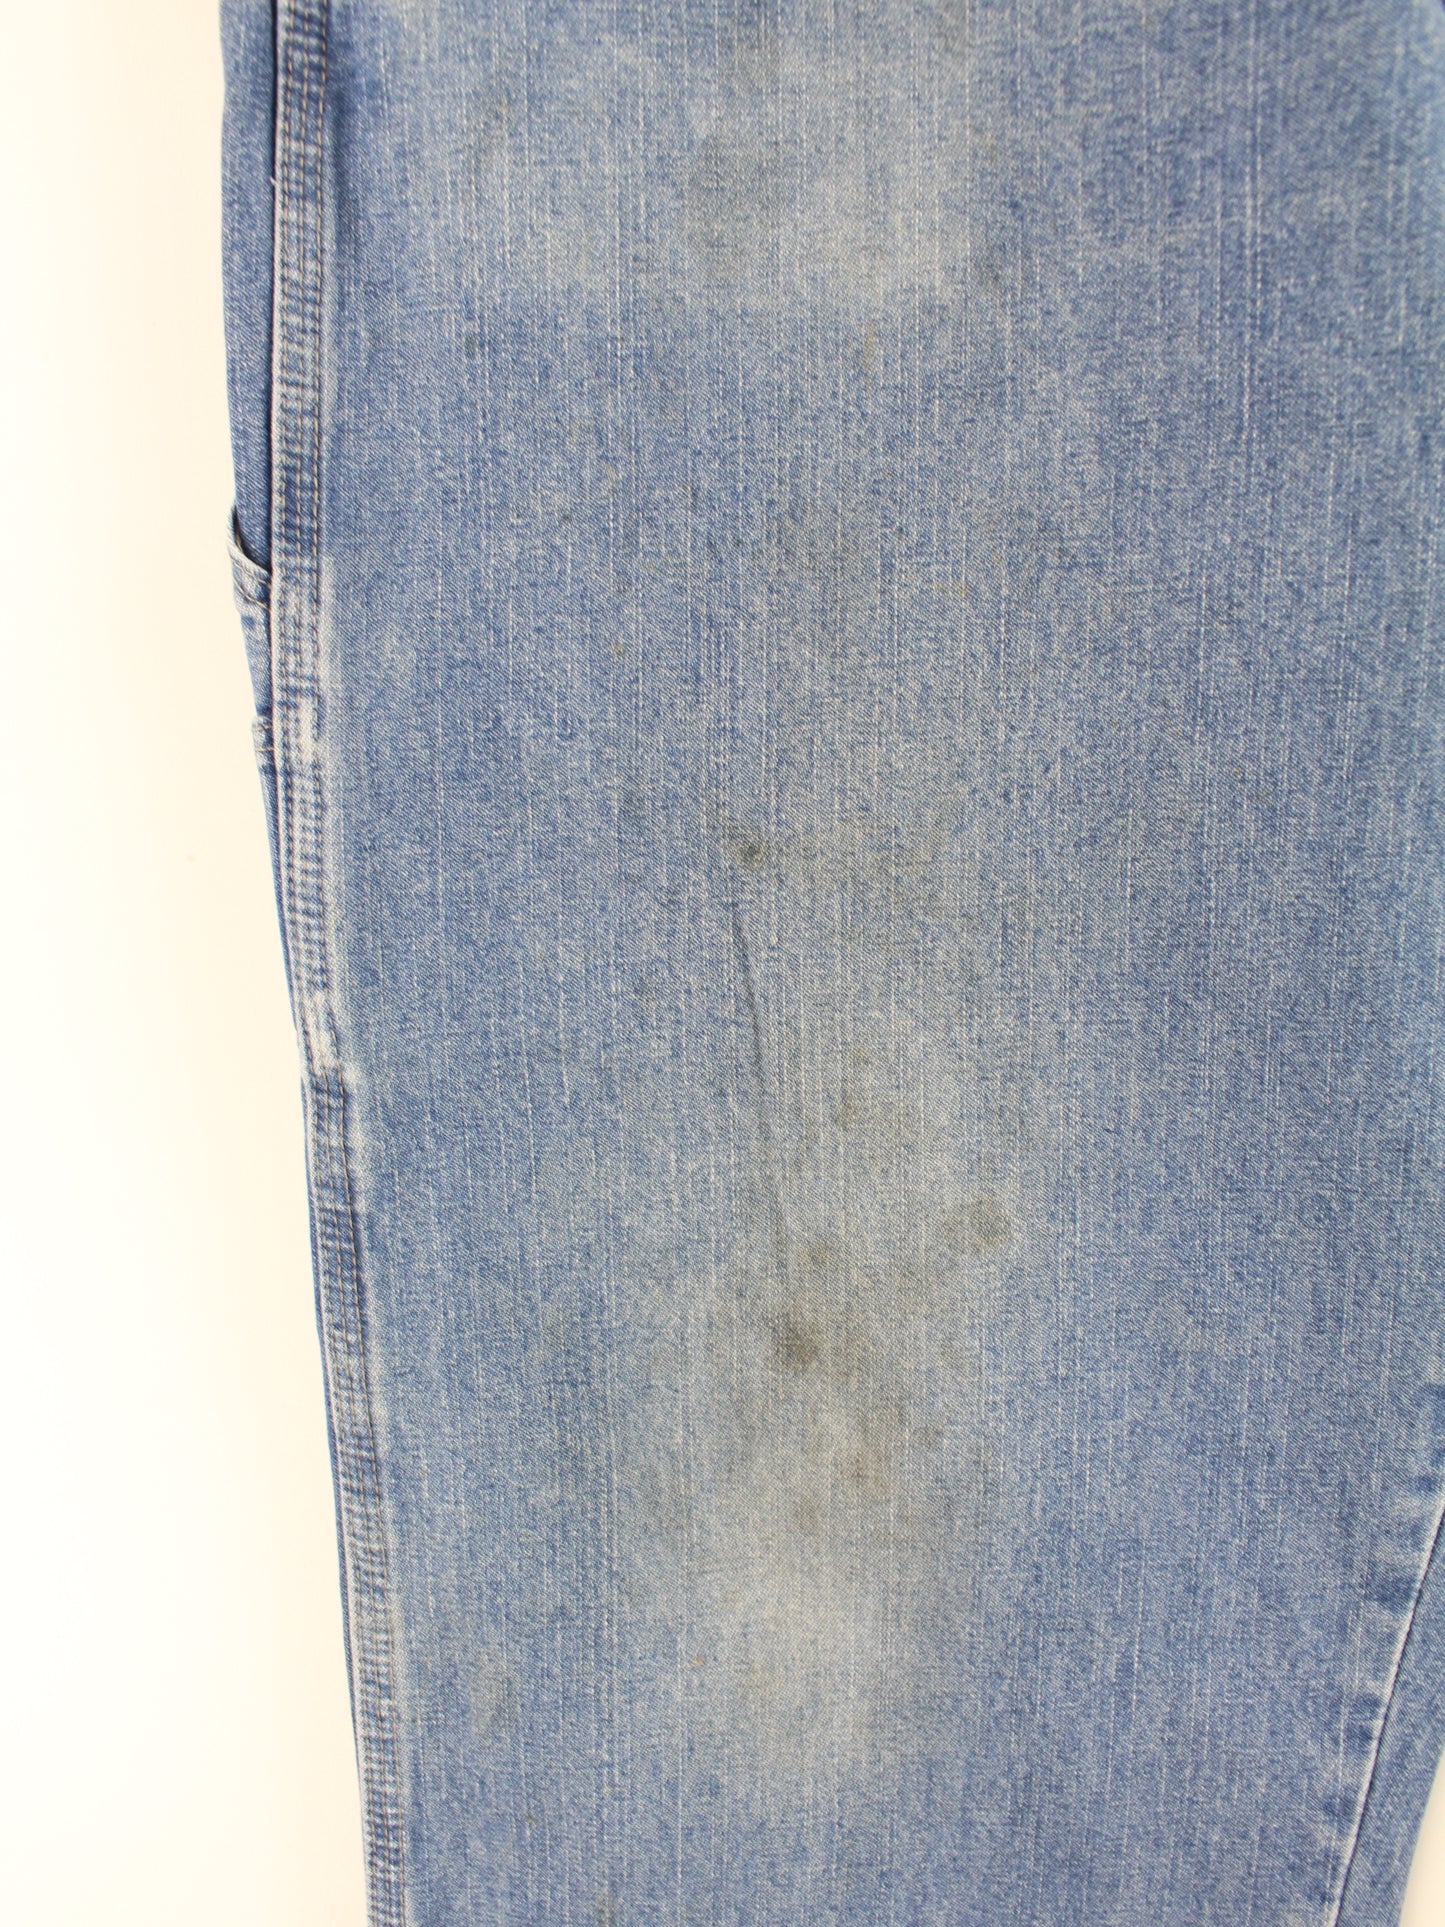 Wrangler Carpenter Jeans Blau W32 L34